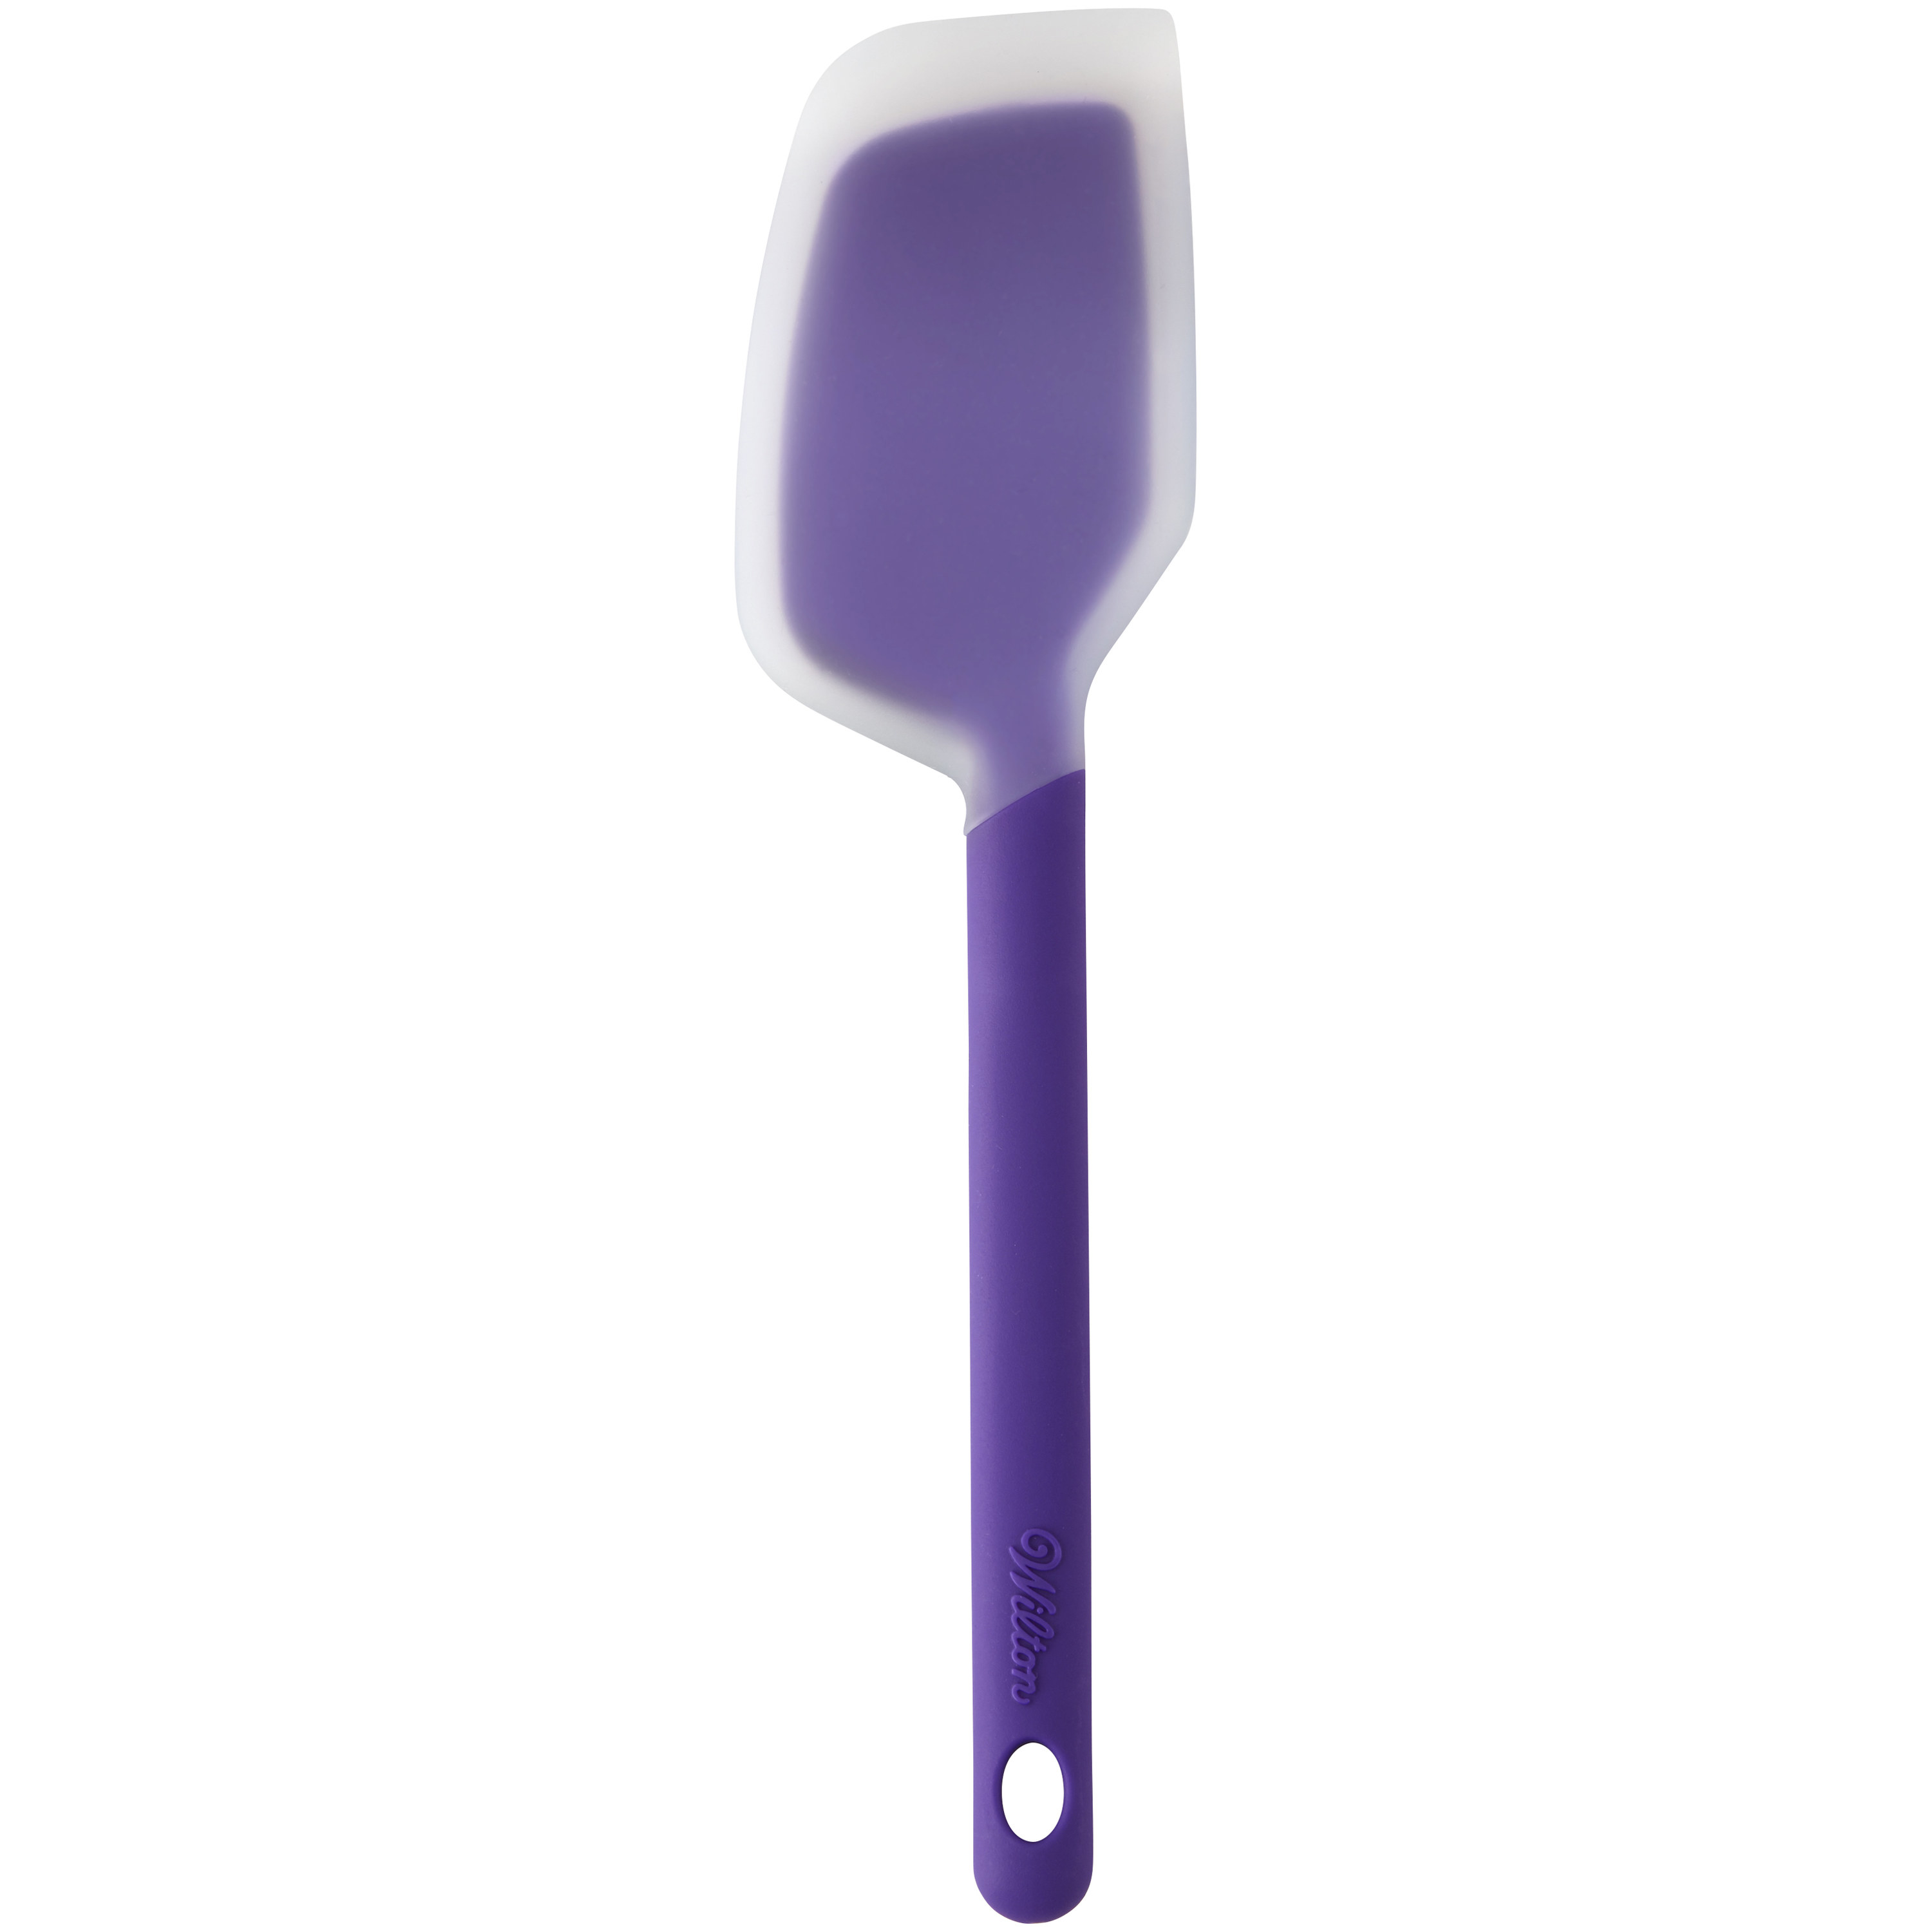 The purple spatula